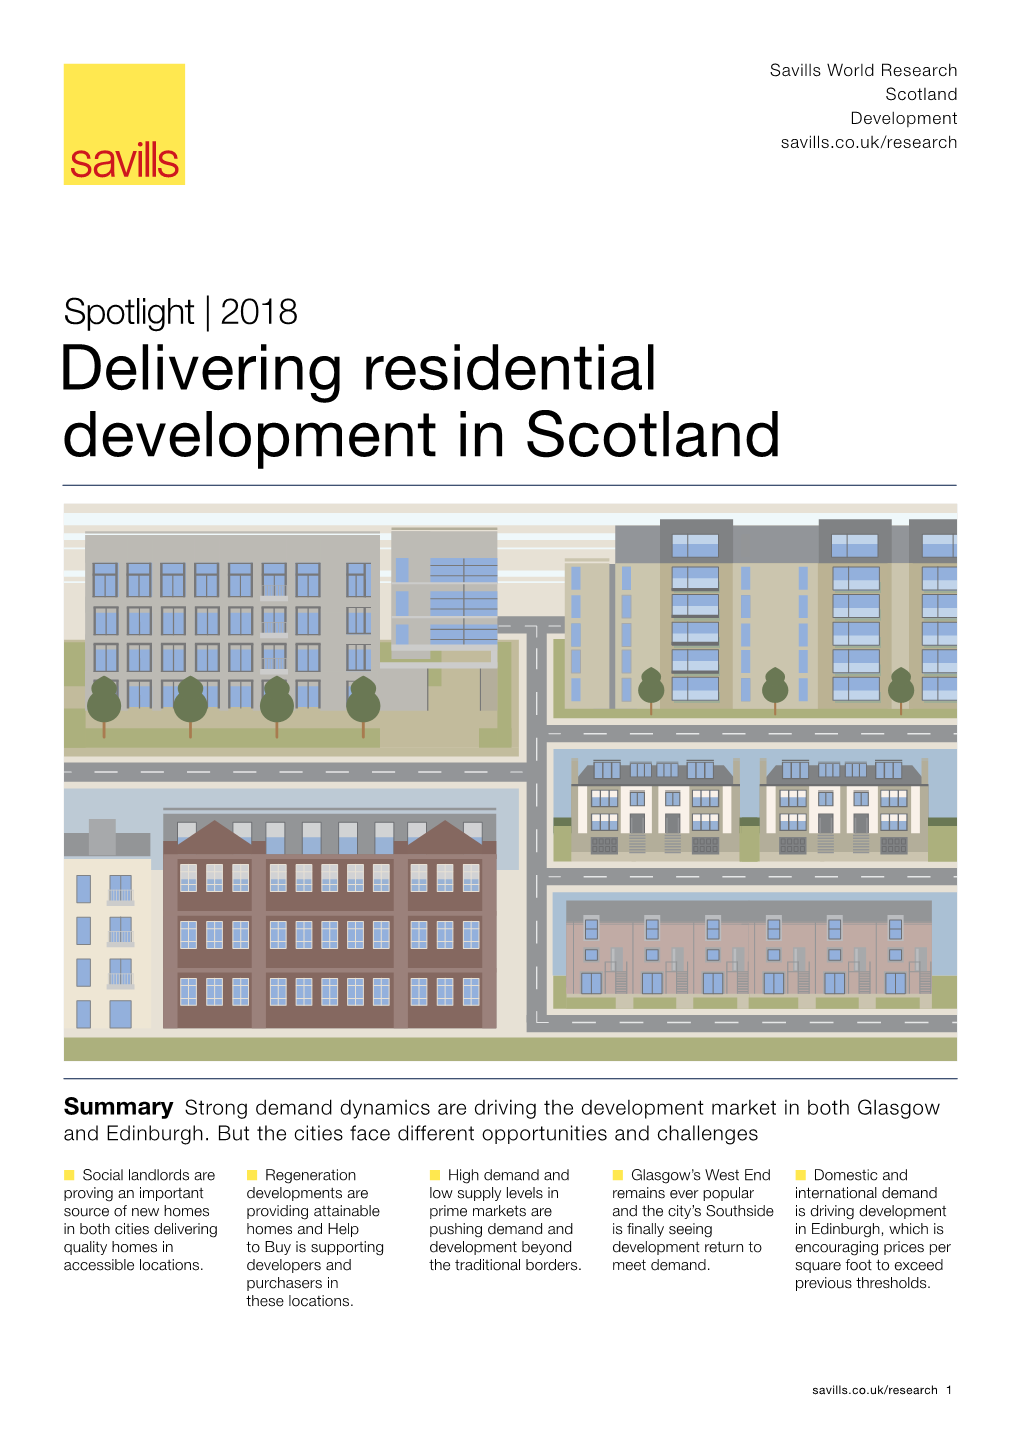 Delivering Residential Development in Scotland